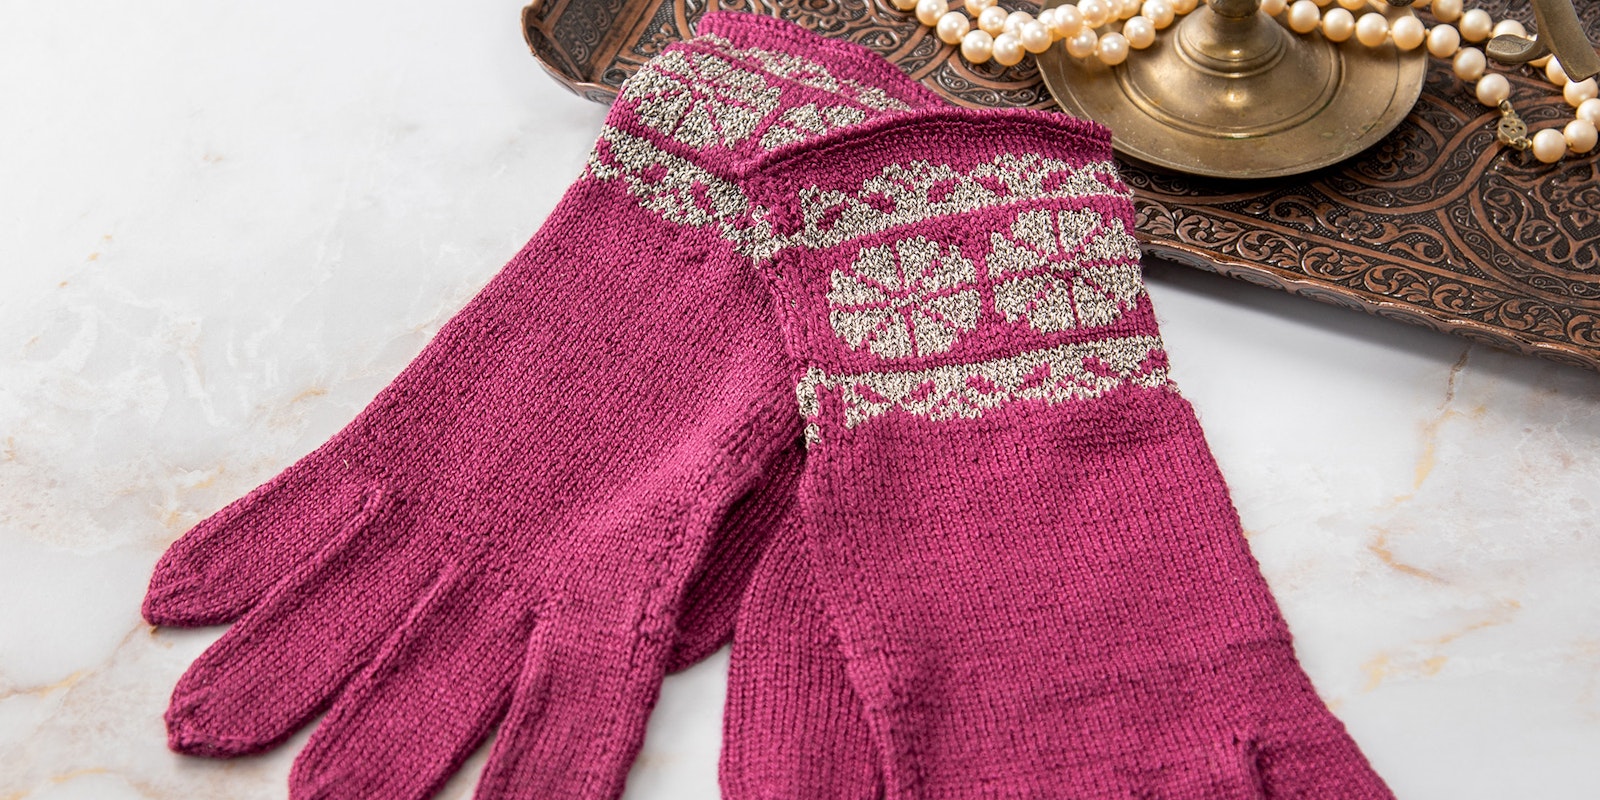 12 Pcs Braided Crochet Ornaments Finger Yarn Guide Handle Miss